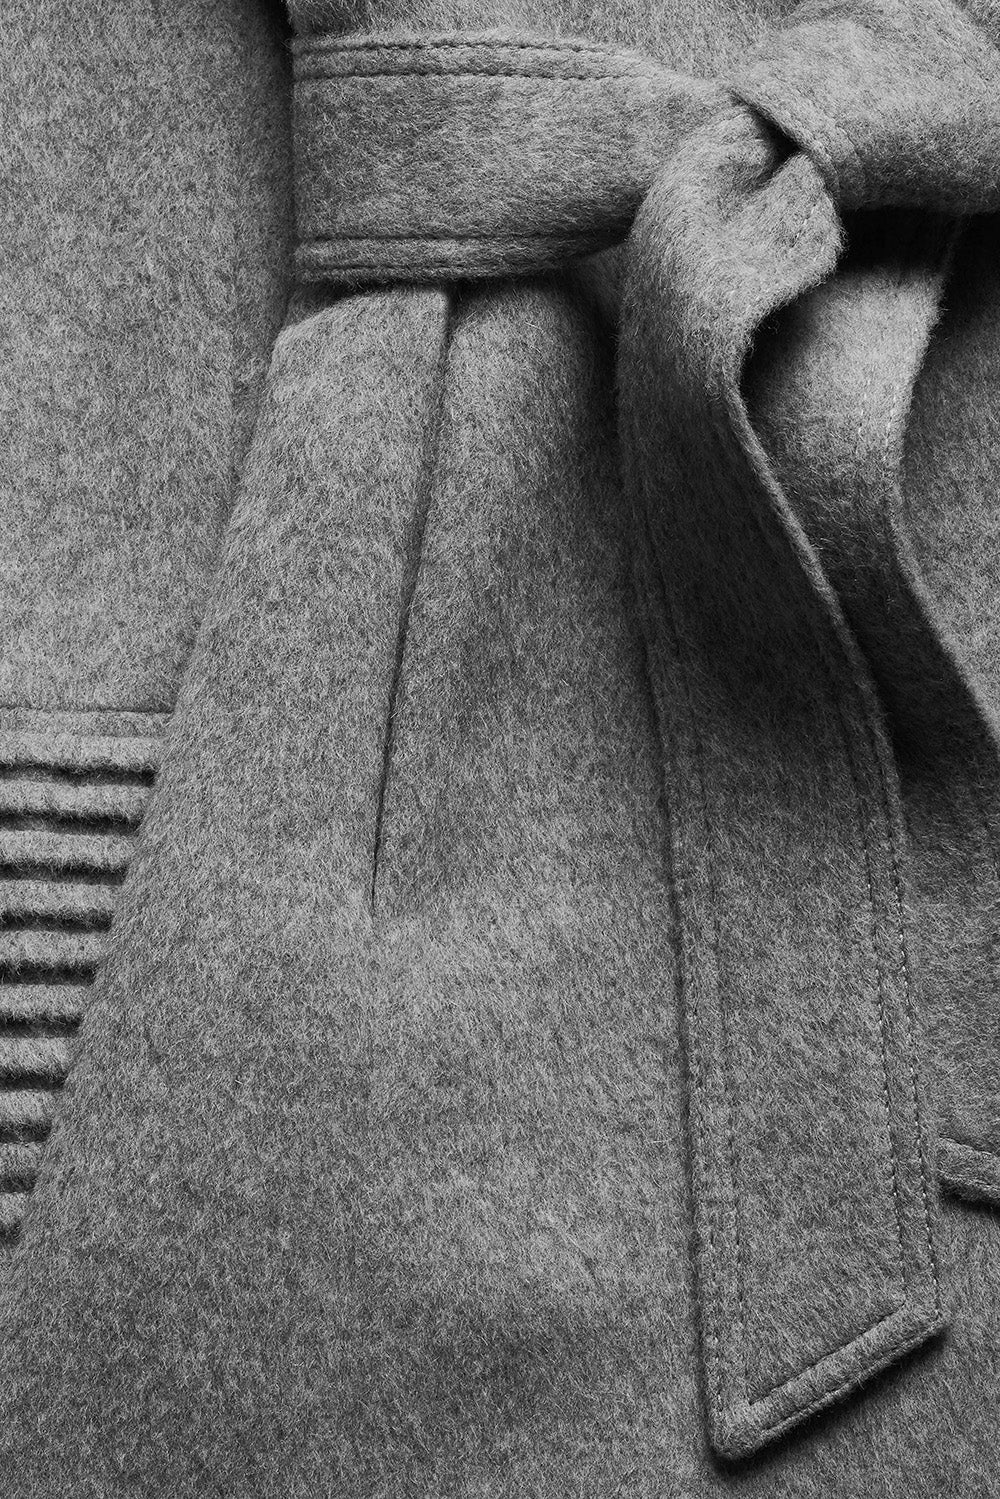 SENTALER Mid Length Hooded Wrap Coat in Sepia - Size S